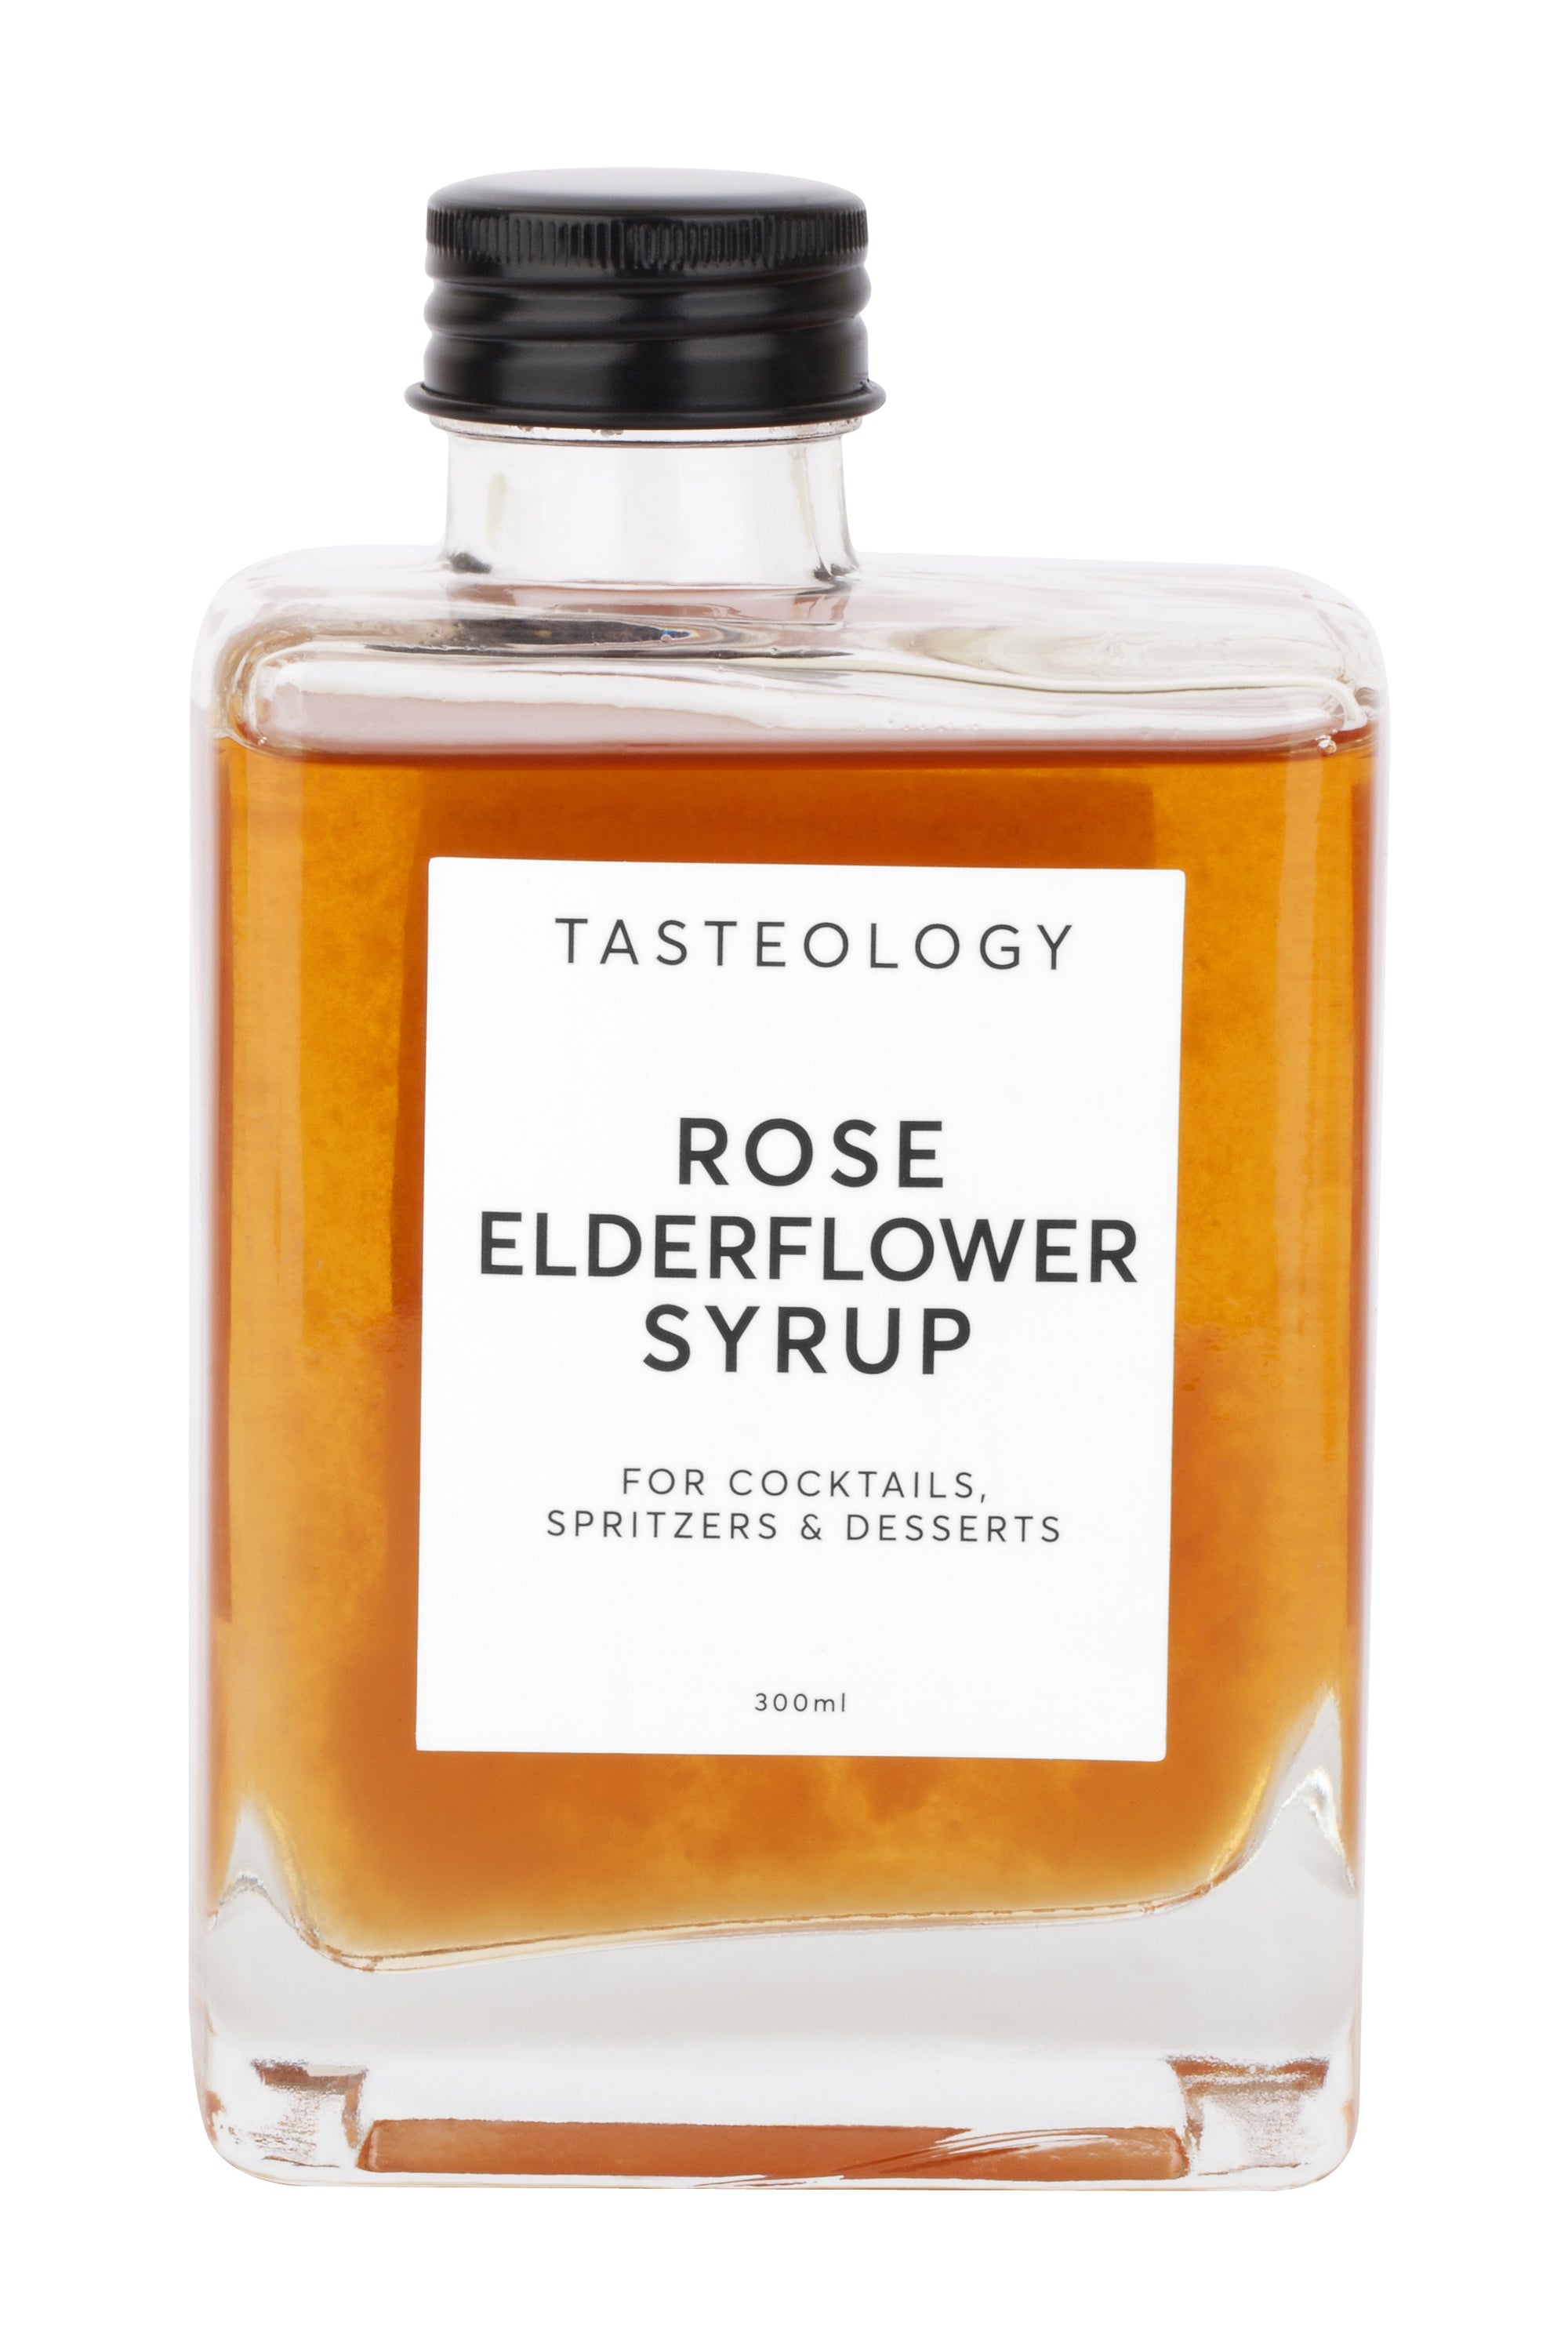 Tasteology Syrup 300ml - Rose Elderflower